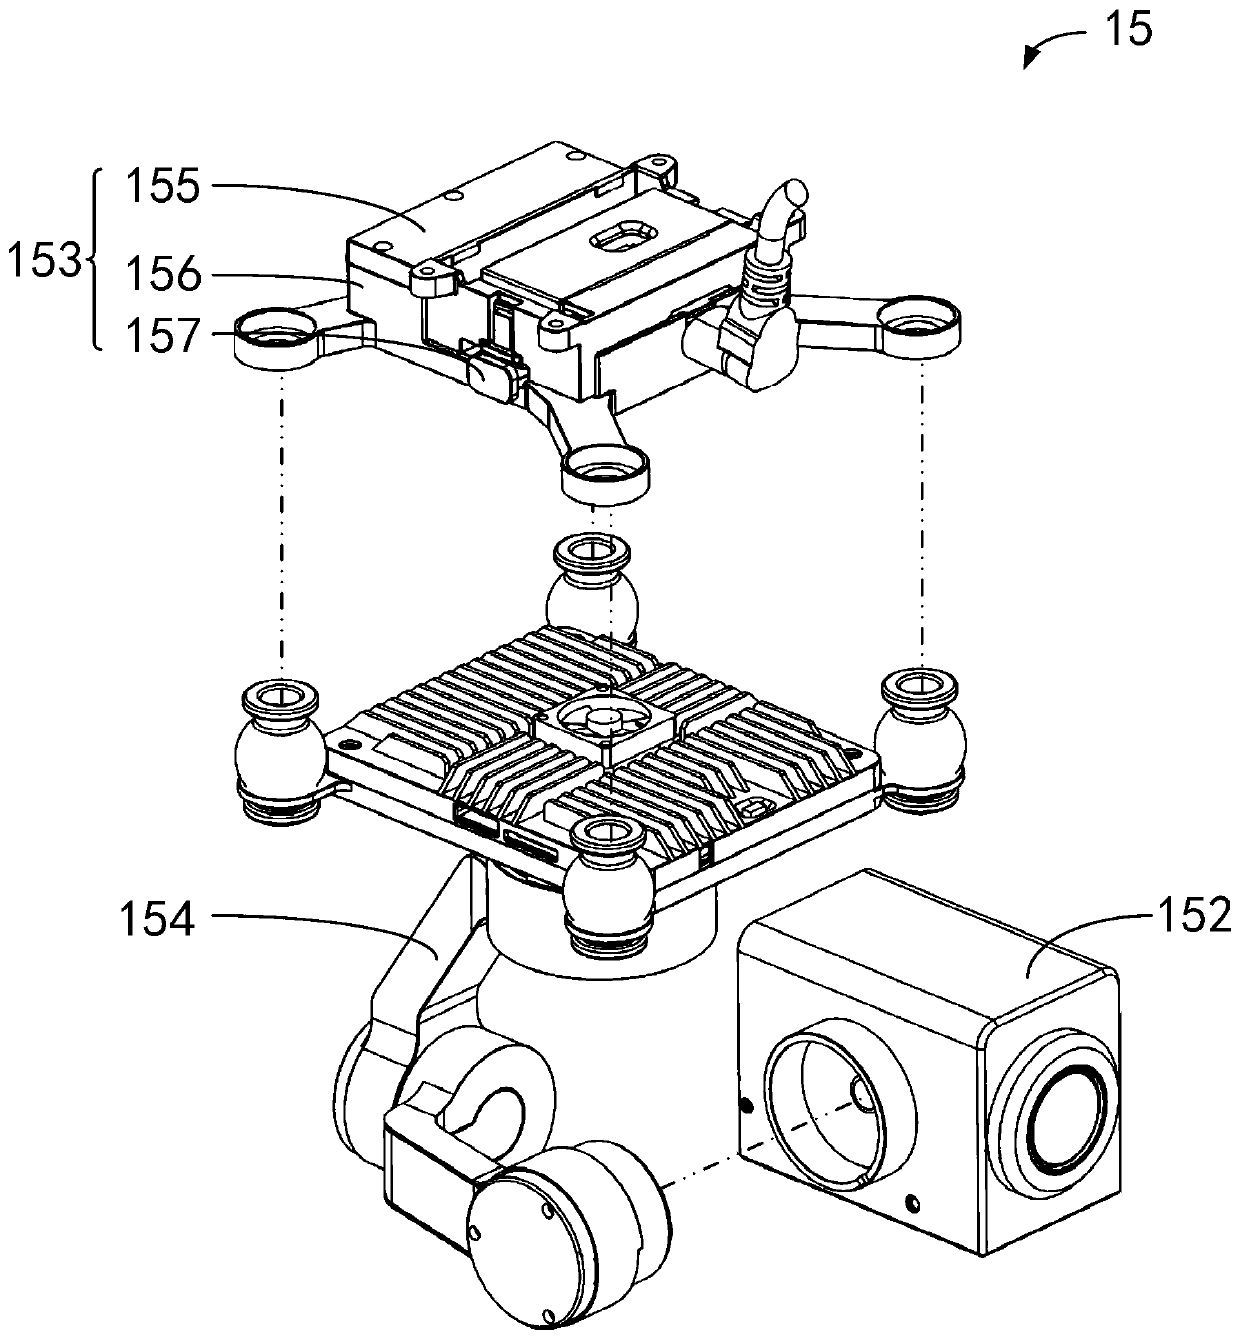 Replaceable pan-tilt camera, aircraft, system and pan-tilt replacement method thereof